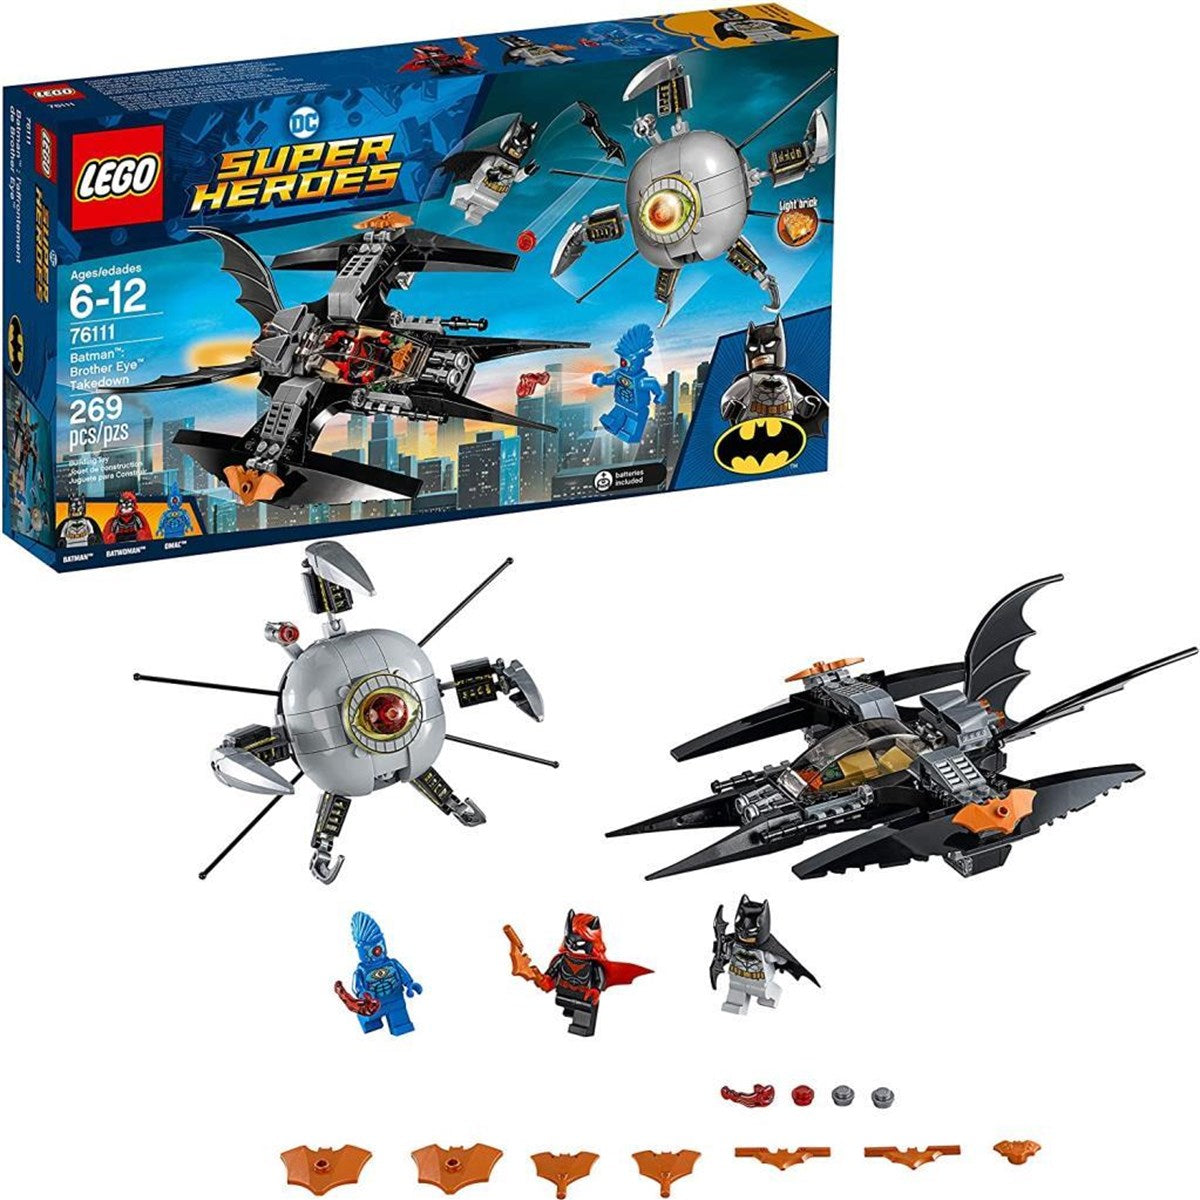 Lego Super Heroes Batman: Brother Eye Takedown 76111 | Toysall